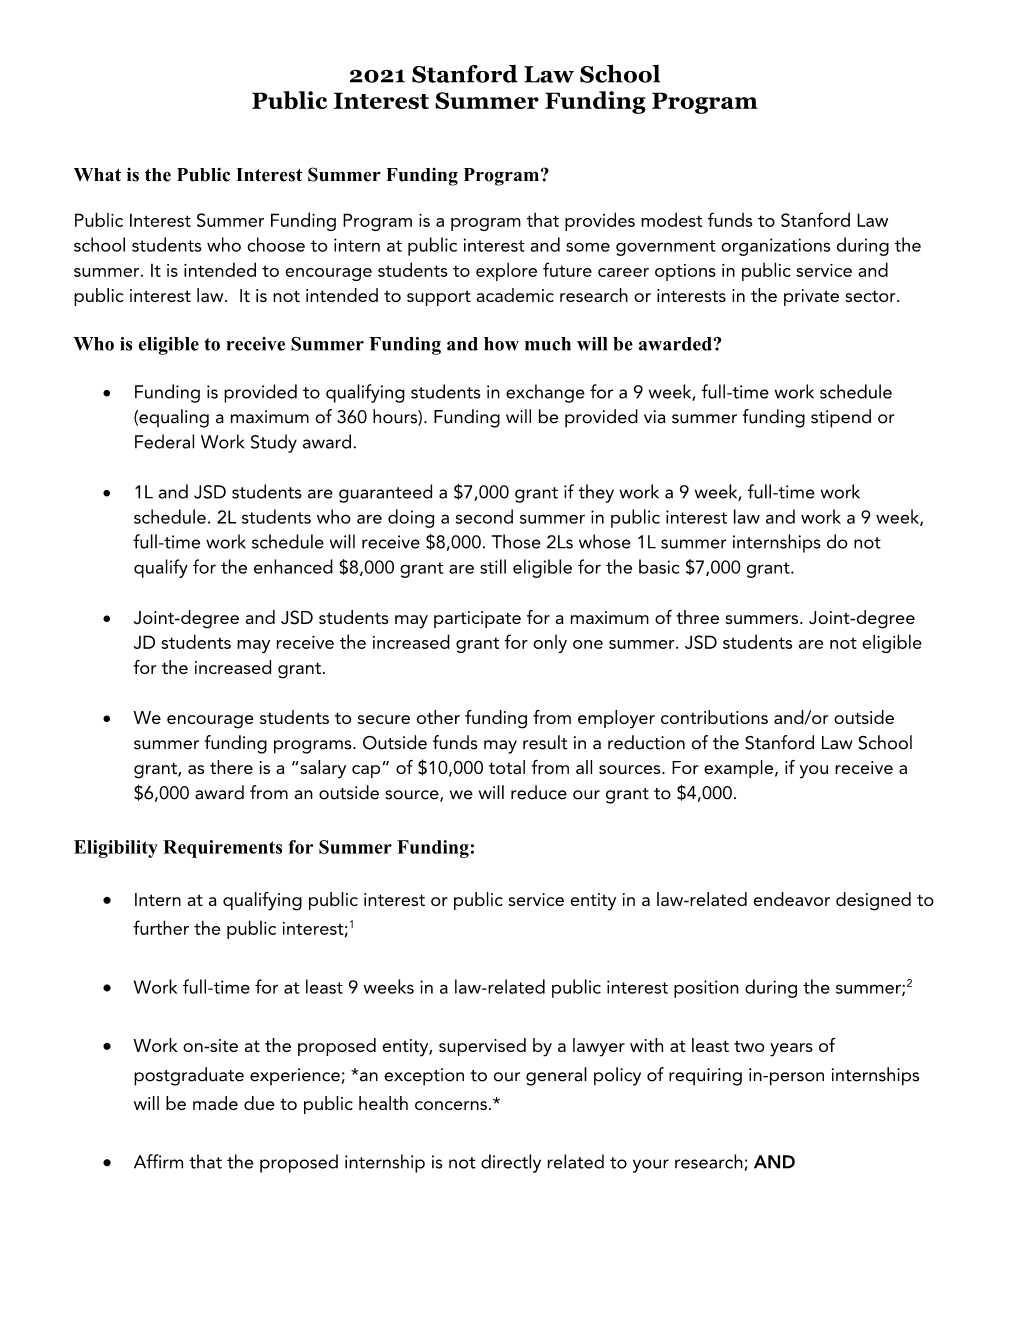 2021 Stanford Law School Public Interest Summer Funding Program